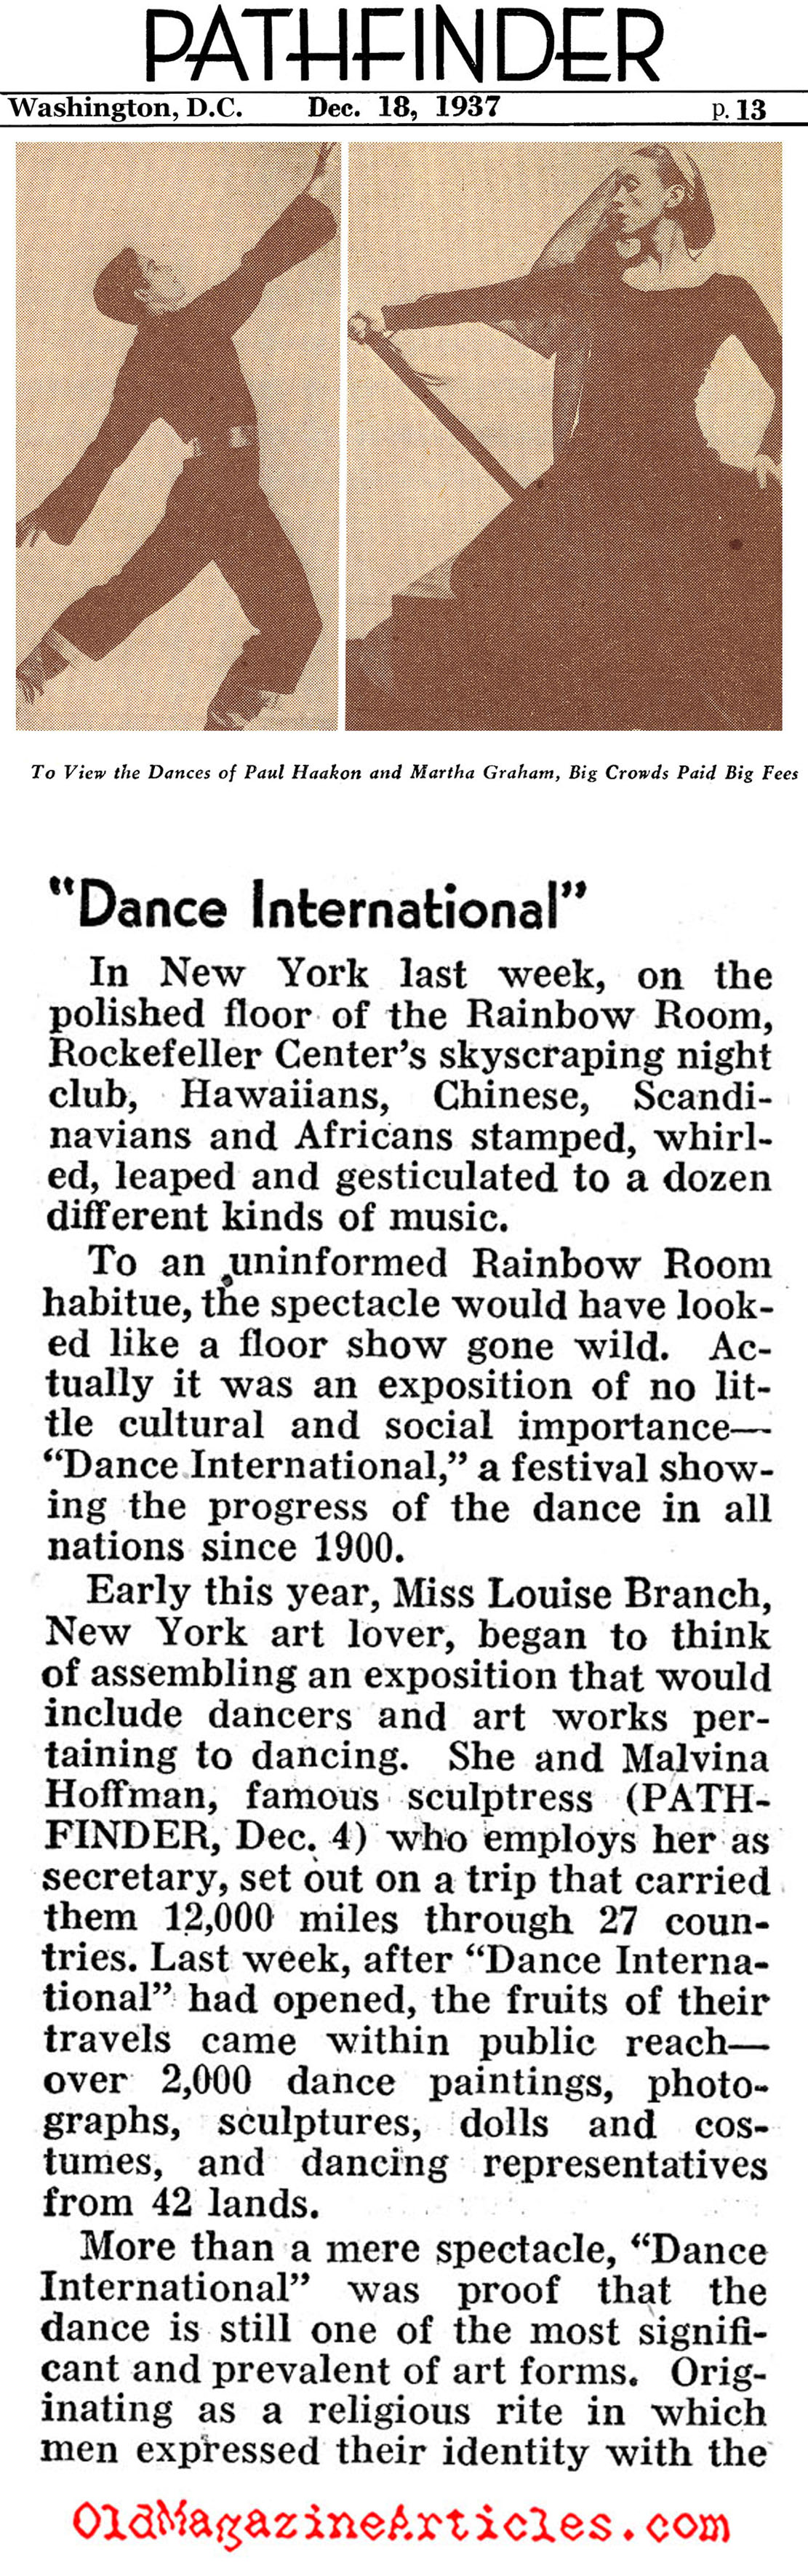 Dance International (Pathfinder Magazine, 1937)